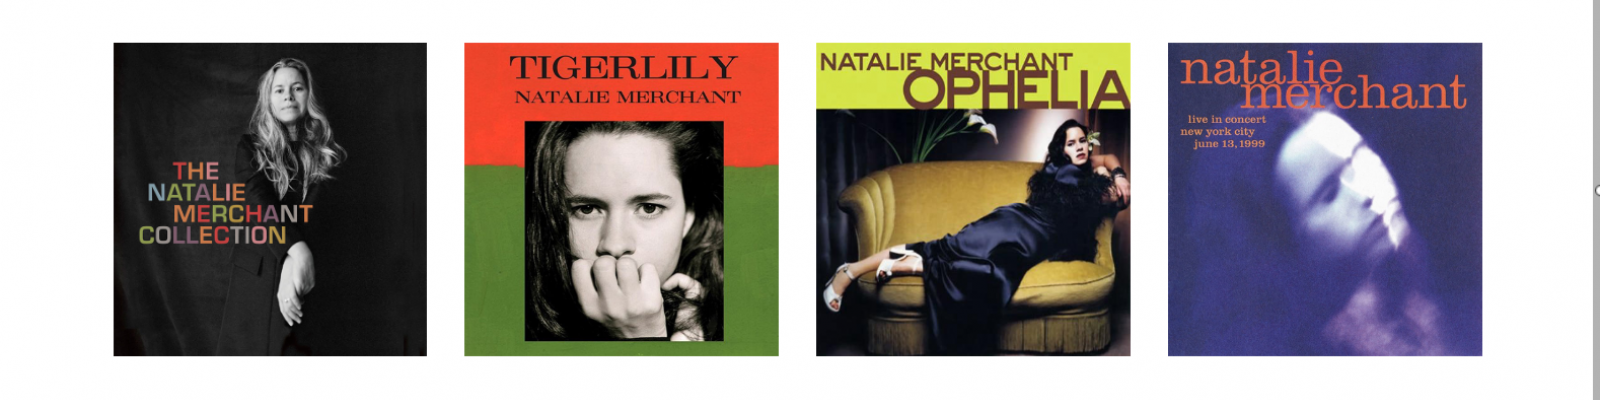 Natalie Merchant Header Image